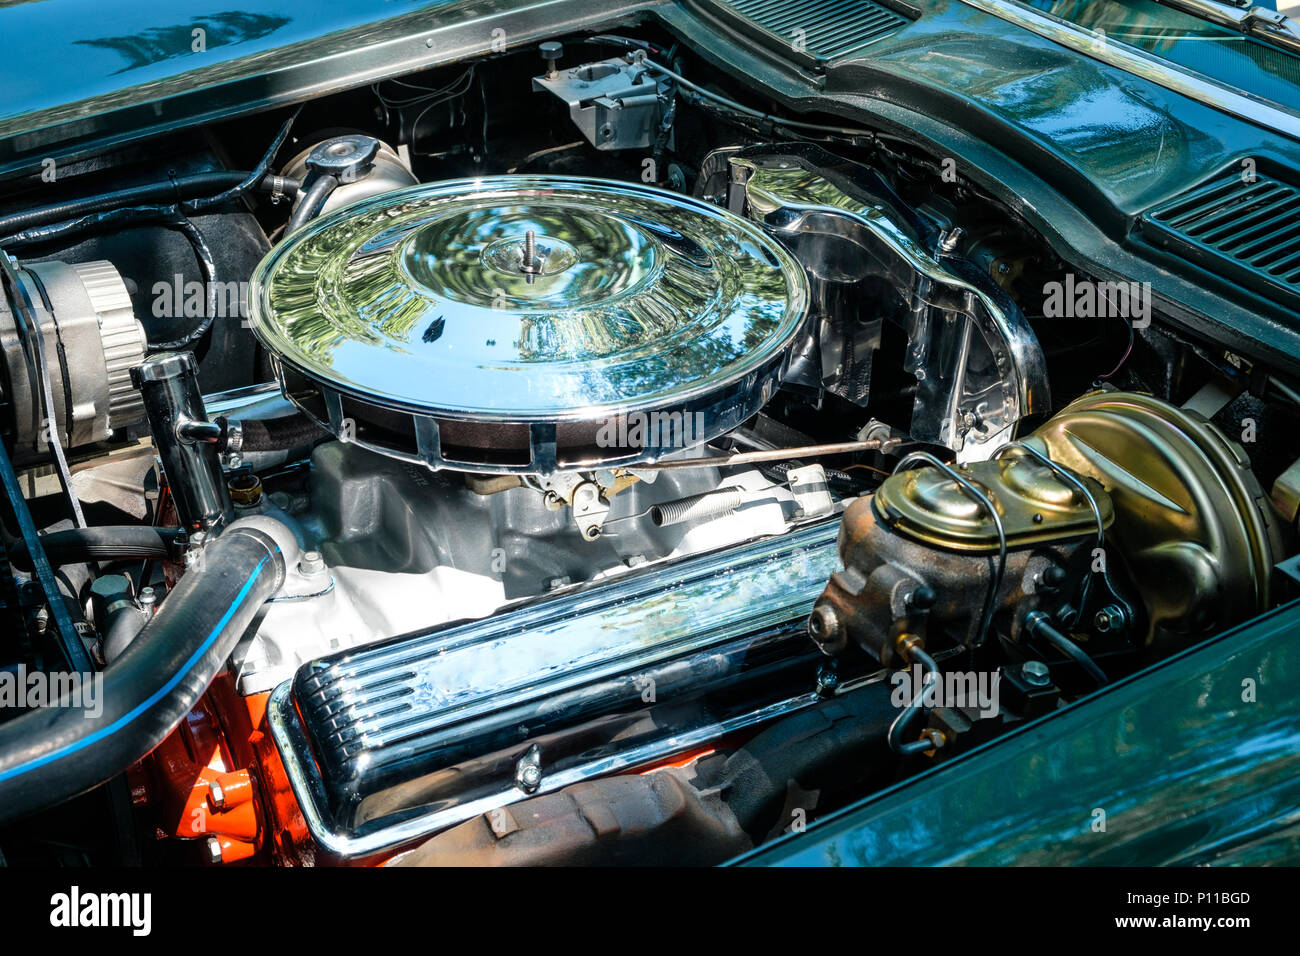 Old car engine interior - oldtimer automobile motor Stock Photo